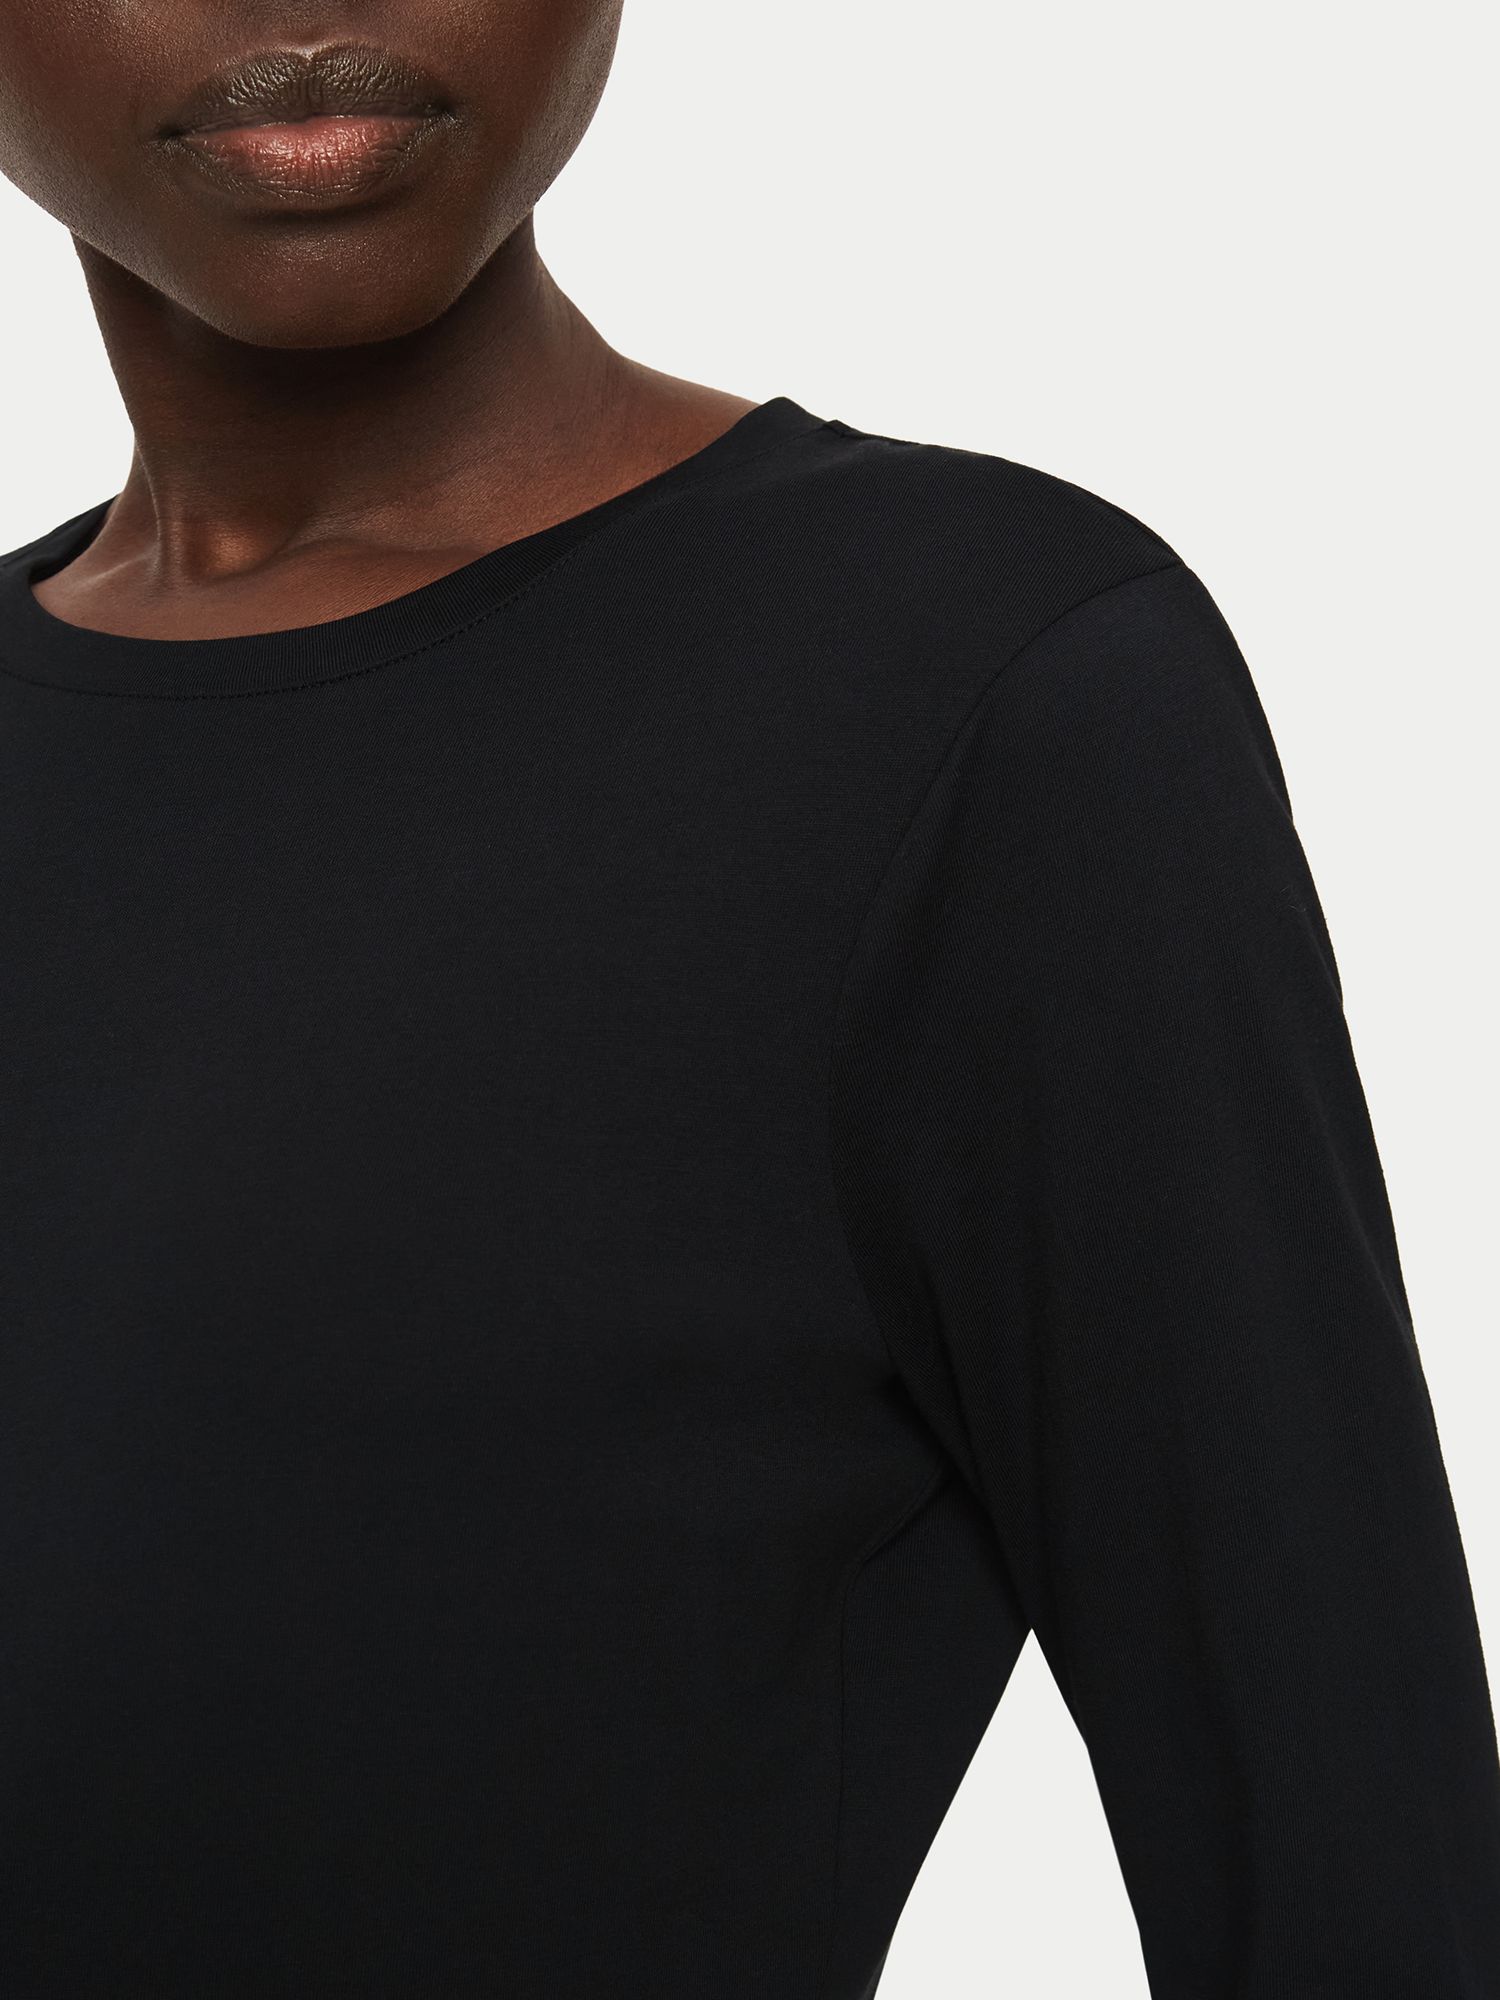 Jigsaw Supima Cotton Long Sleeve T-Shirt, Black, XS